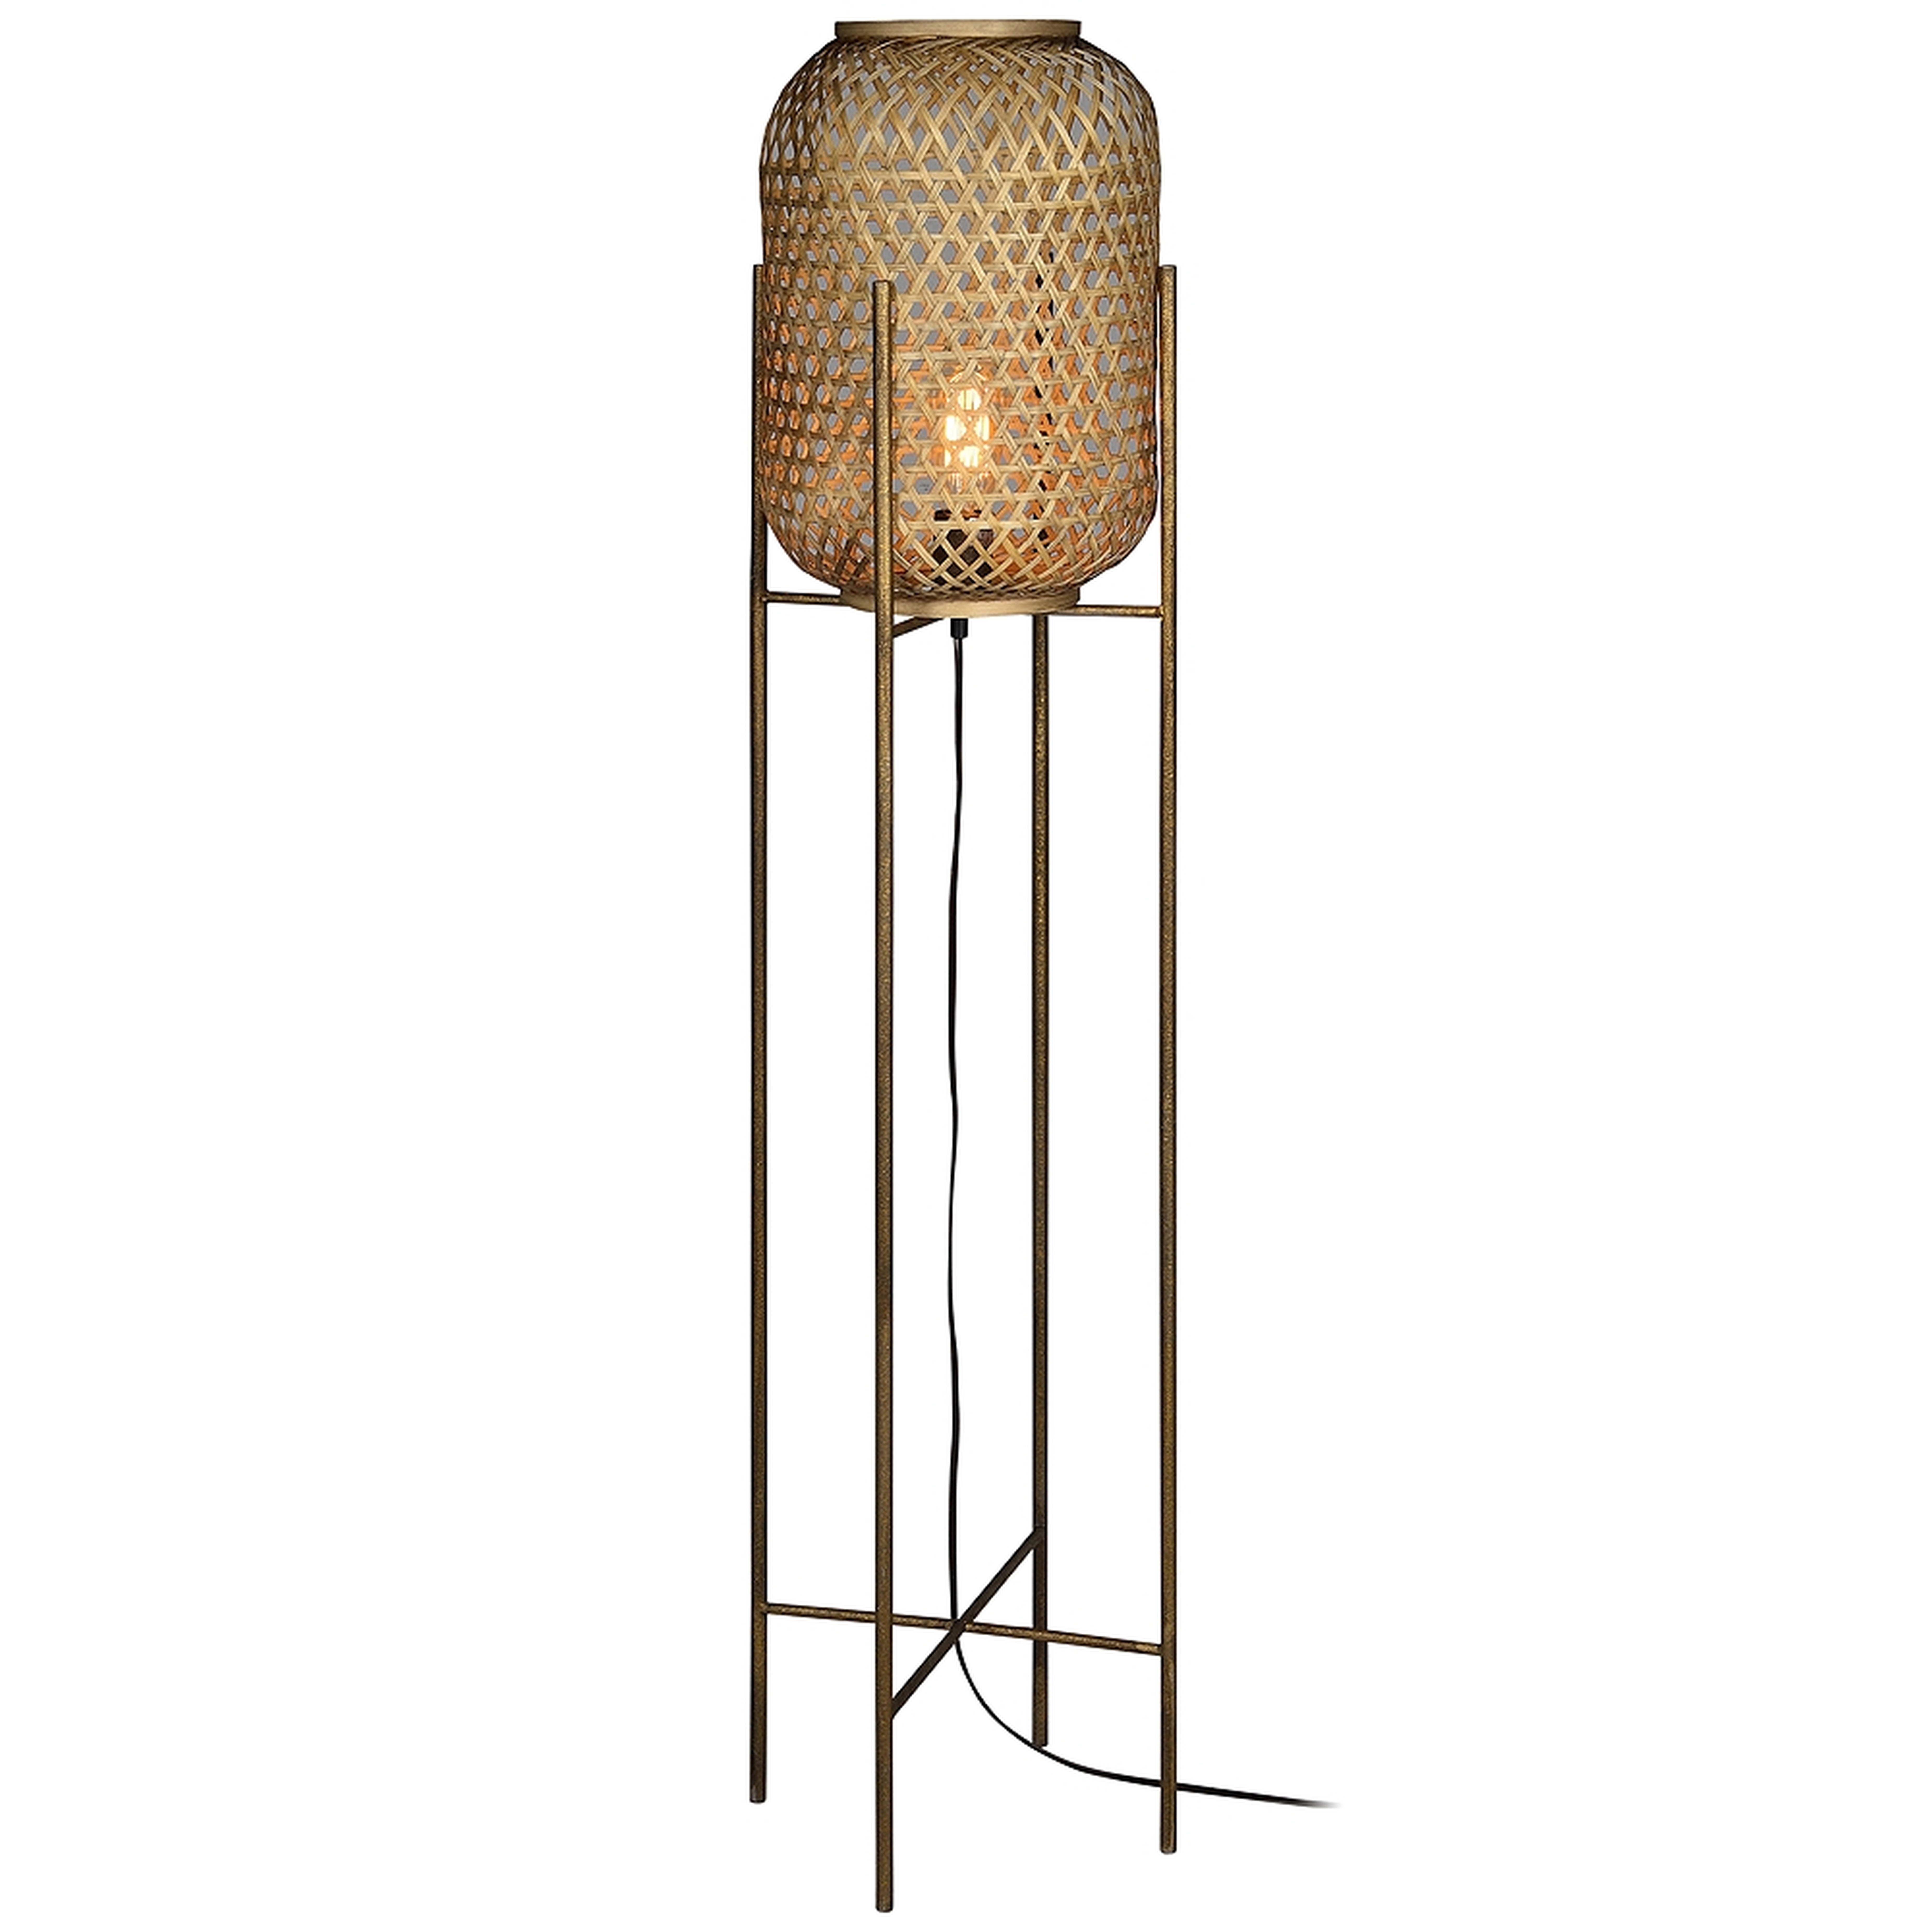 Forty West Robert Antique Bronze Metal and Rattan Floor Lamp - Style # 99W36 - Lamps Plus